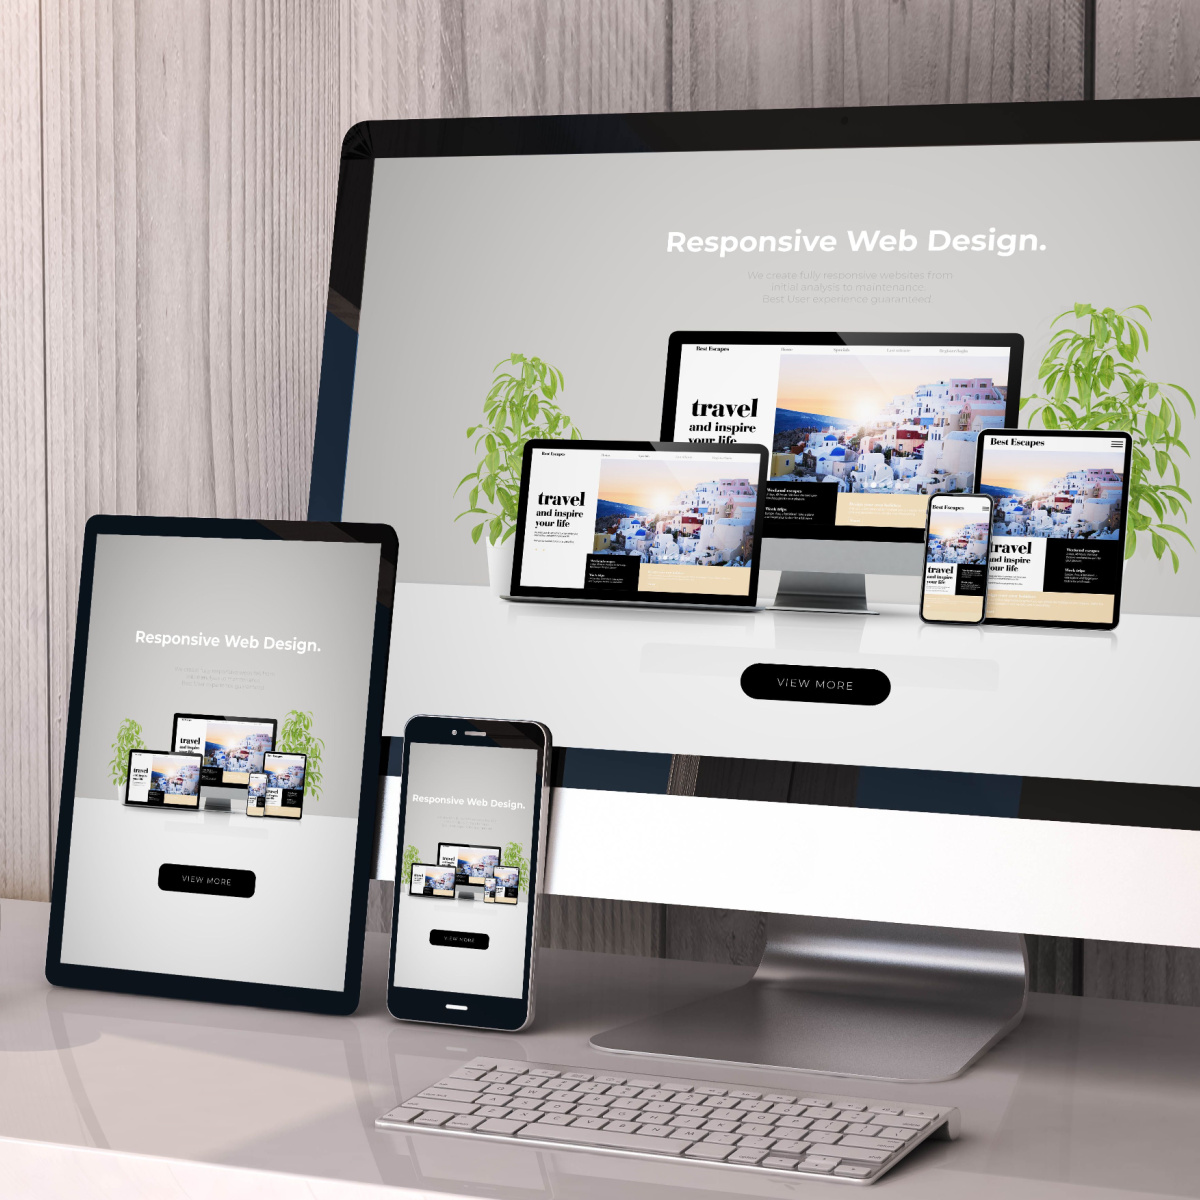 Modern Houston web design optimized for desktop and mobile access.